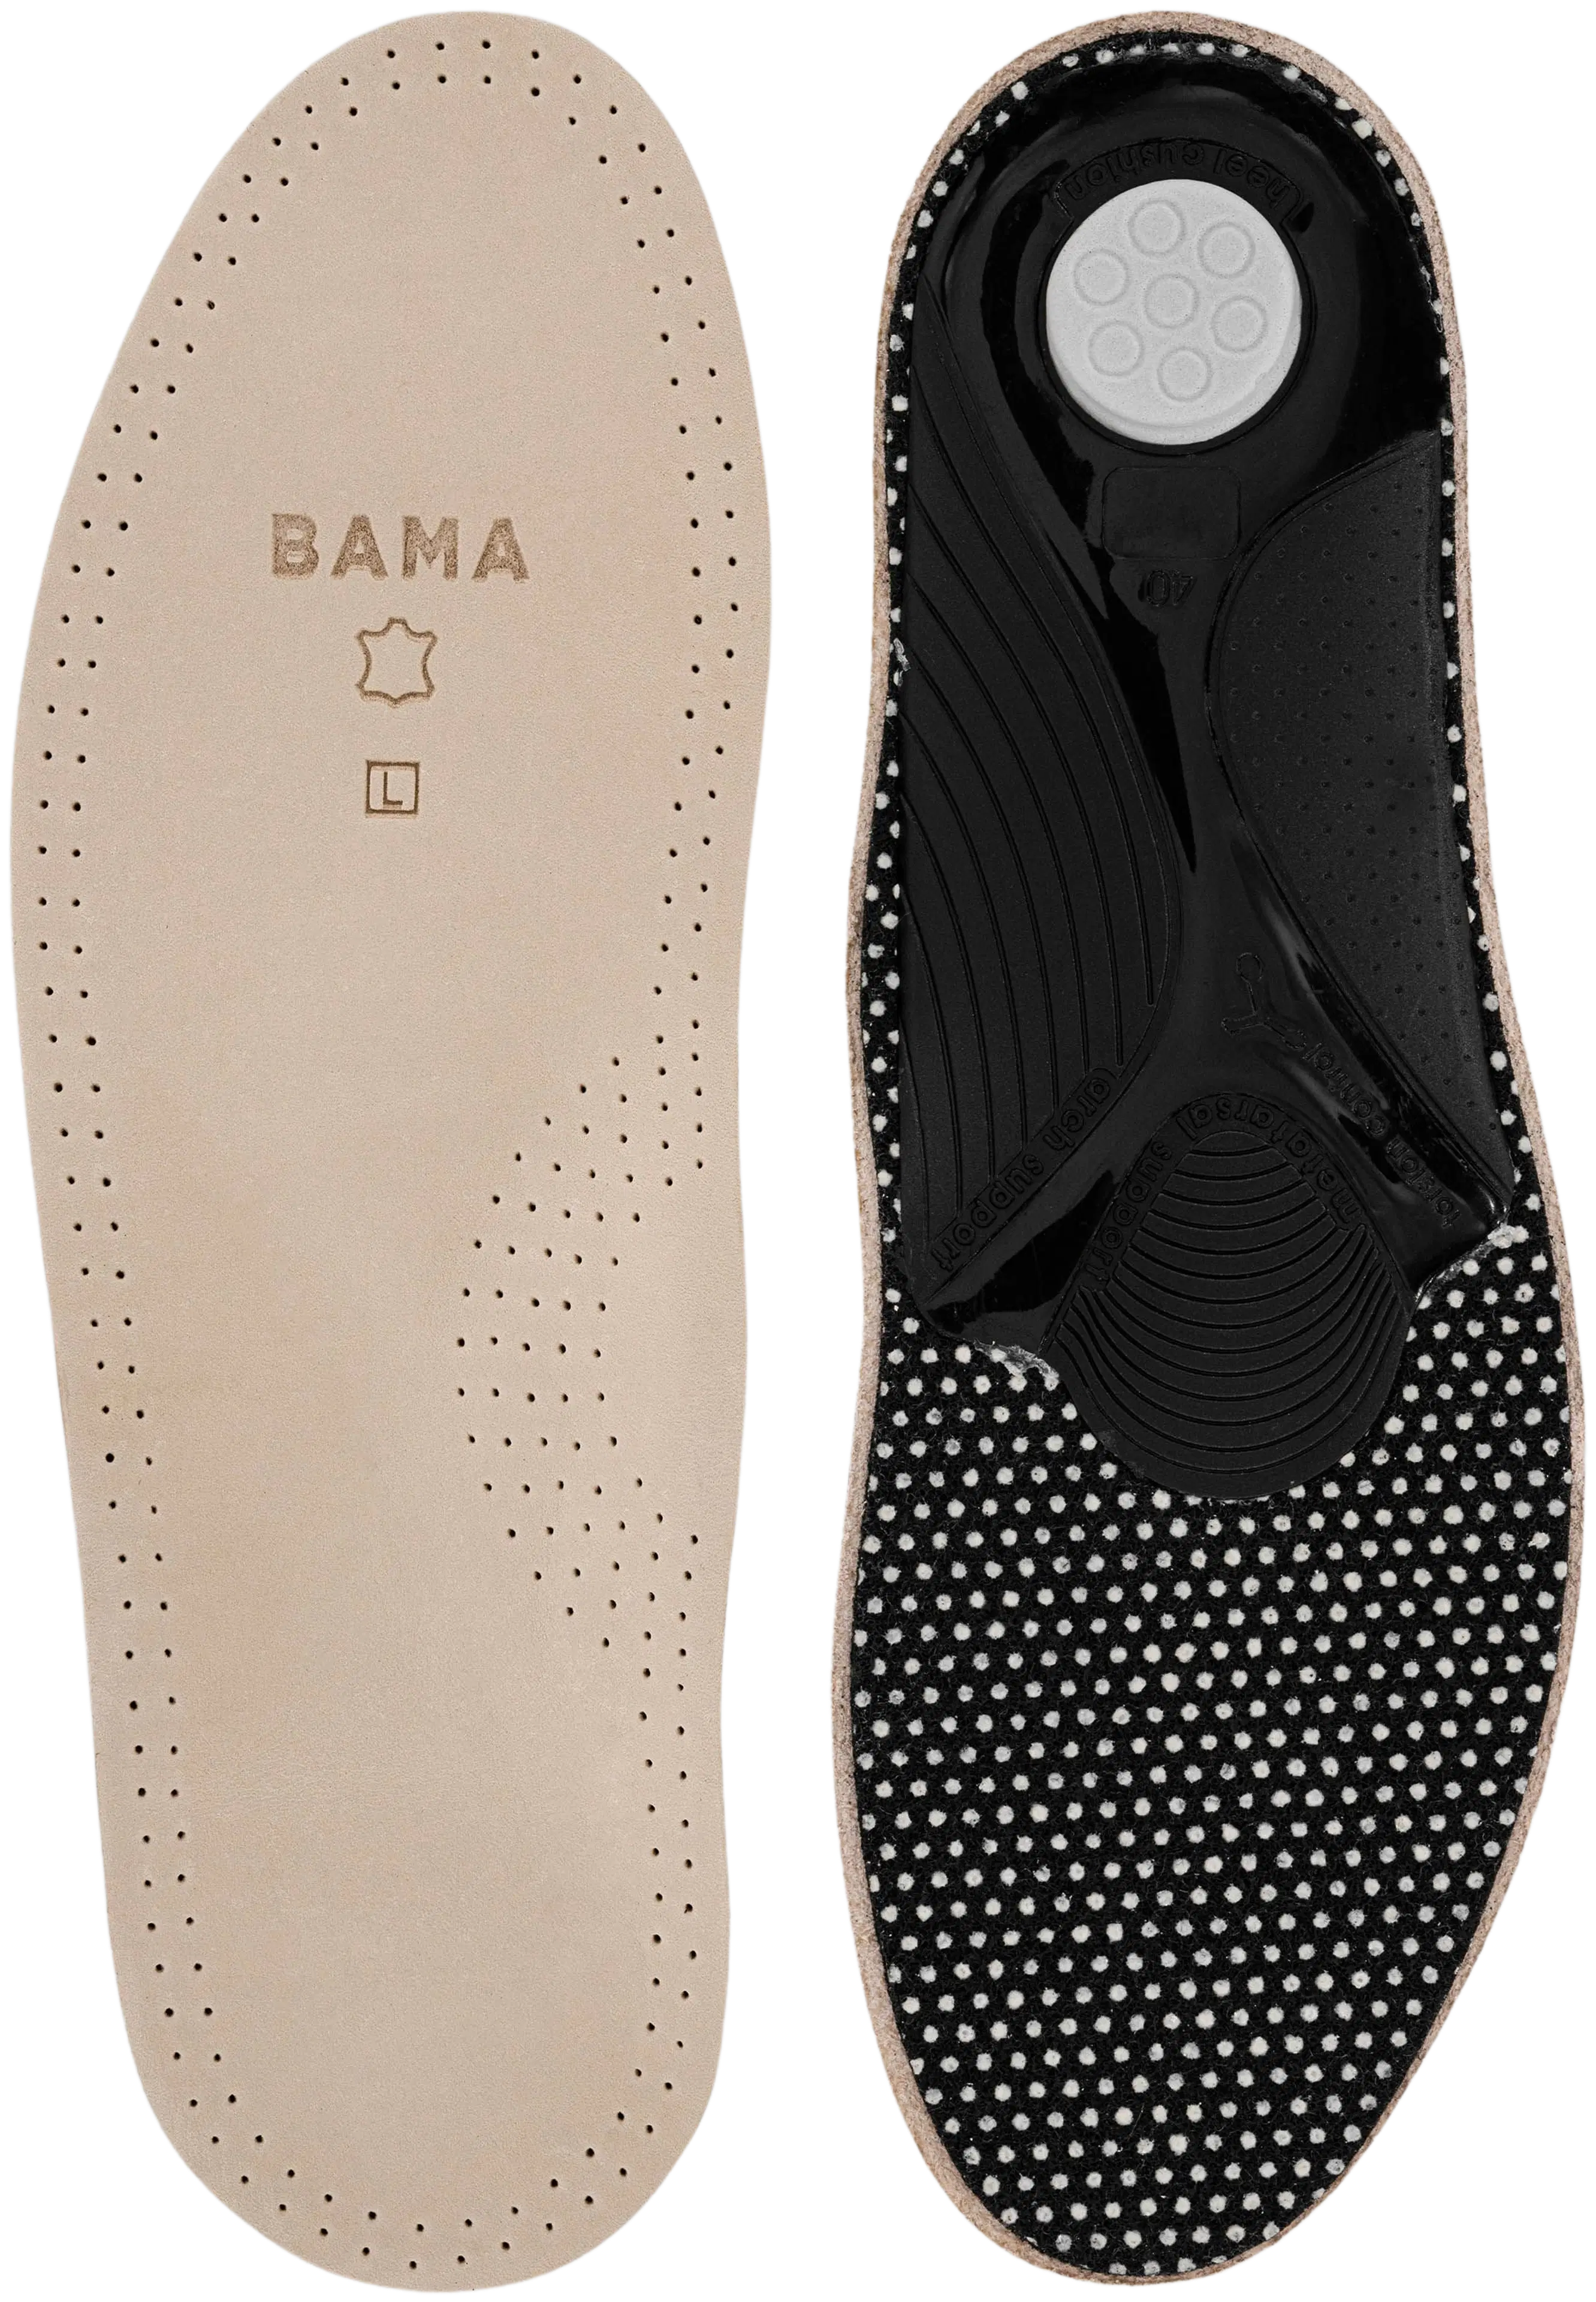 BAMA Premium Leather Footped 36